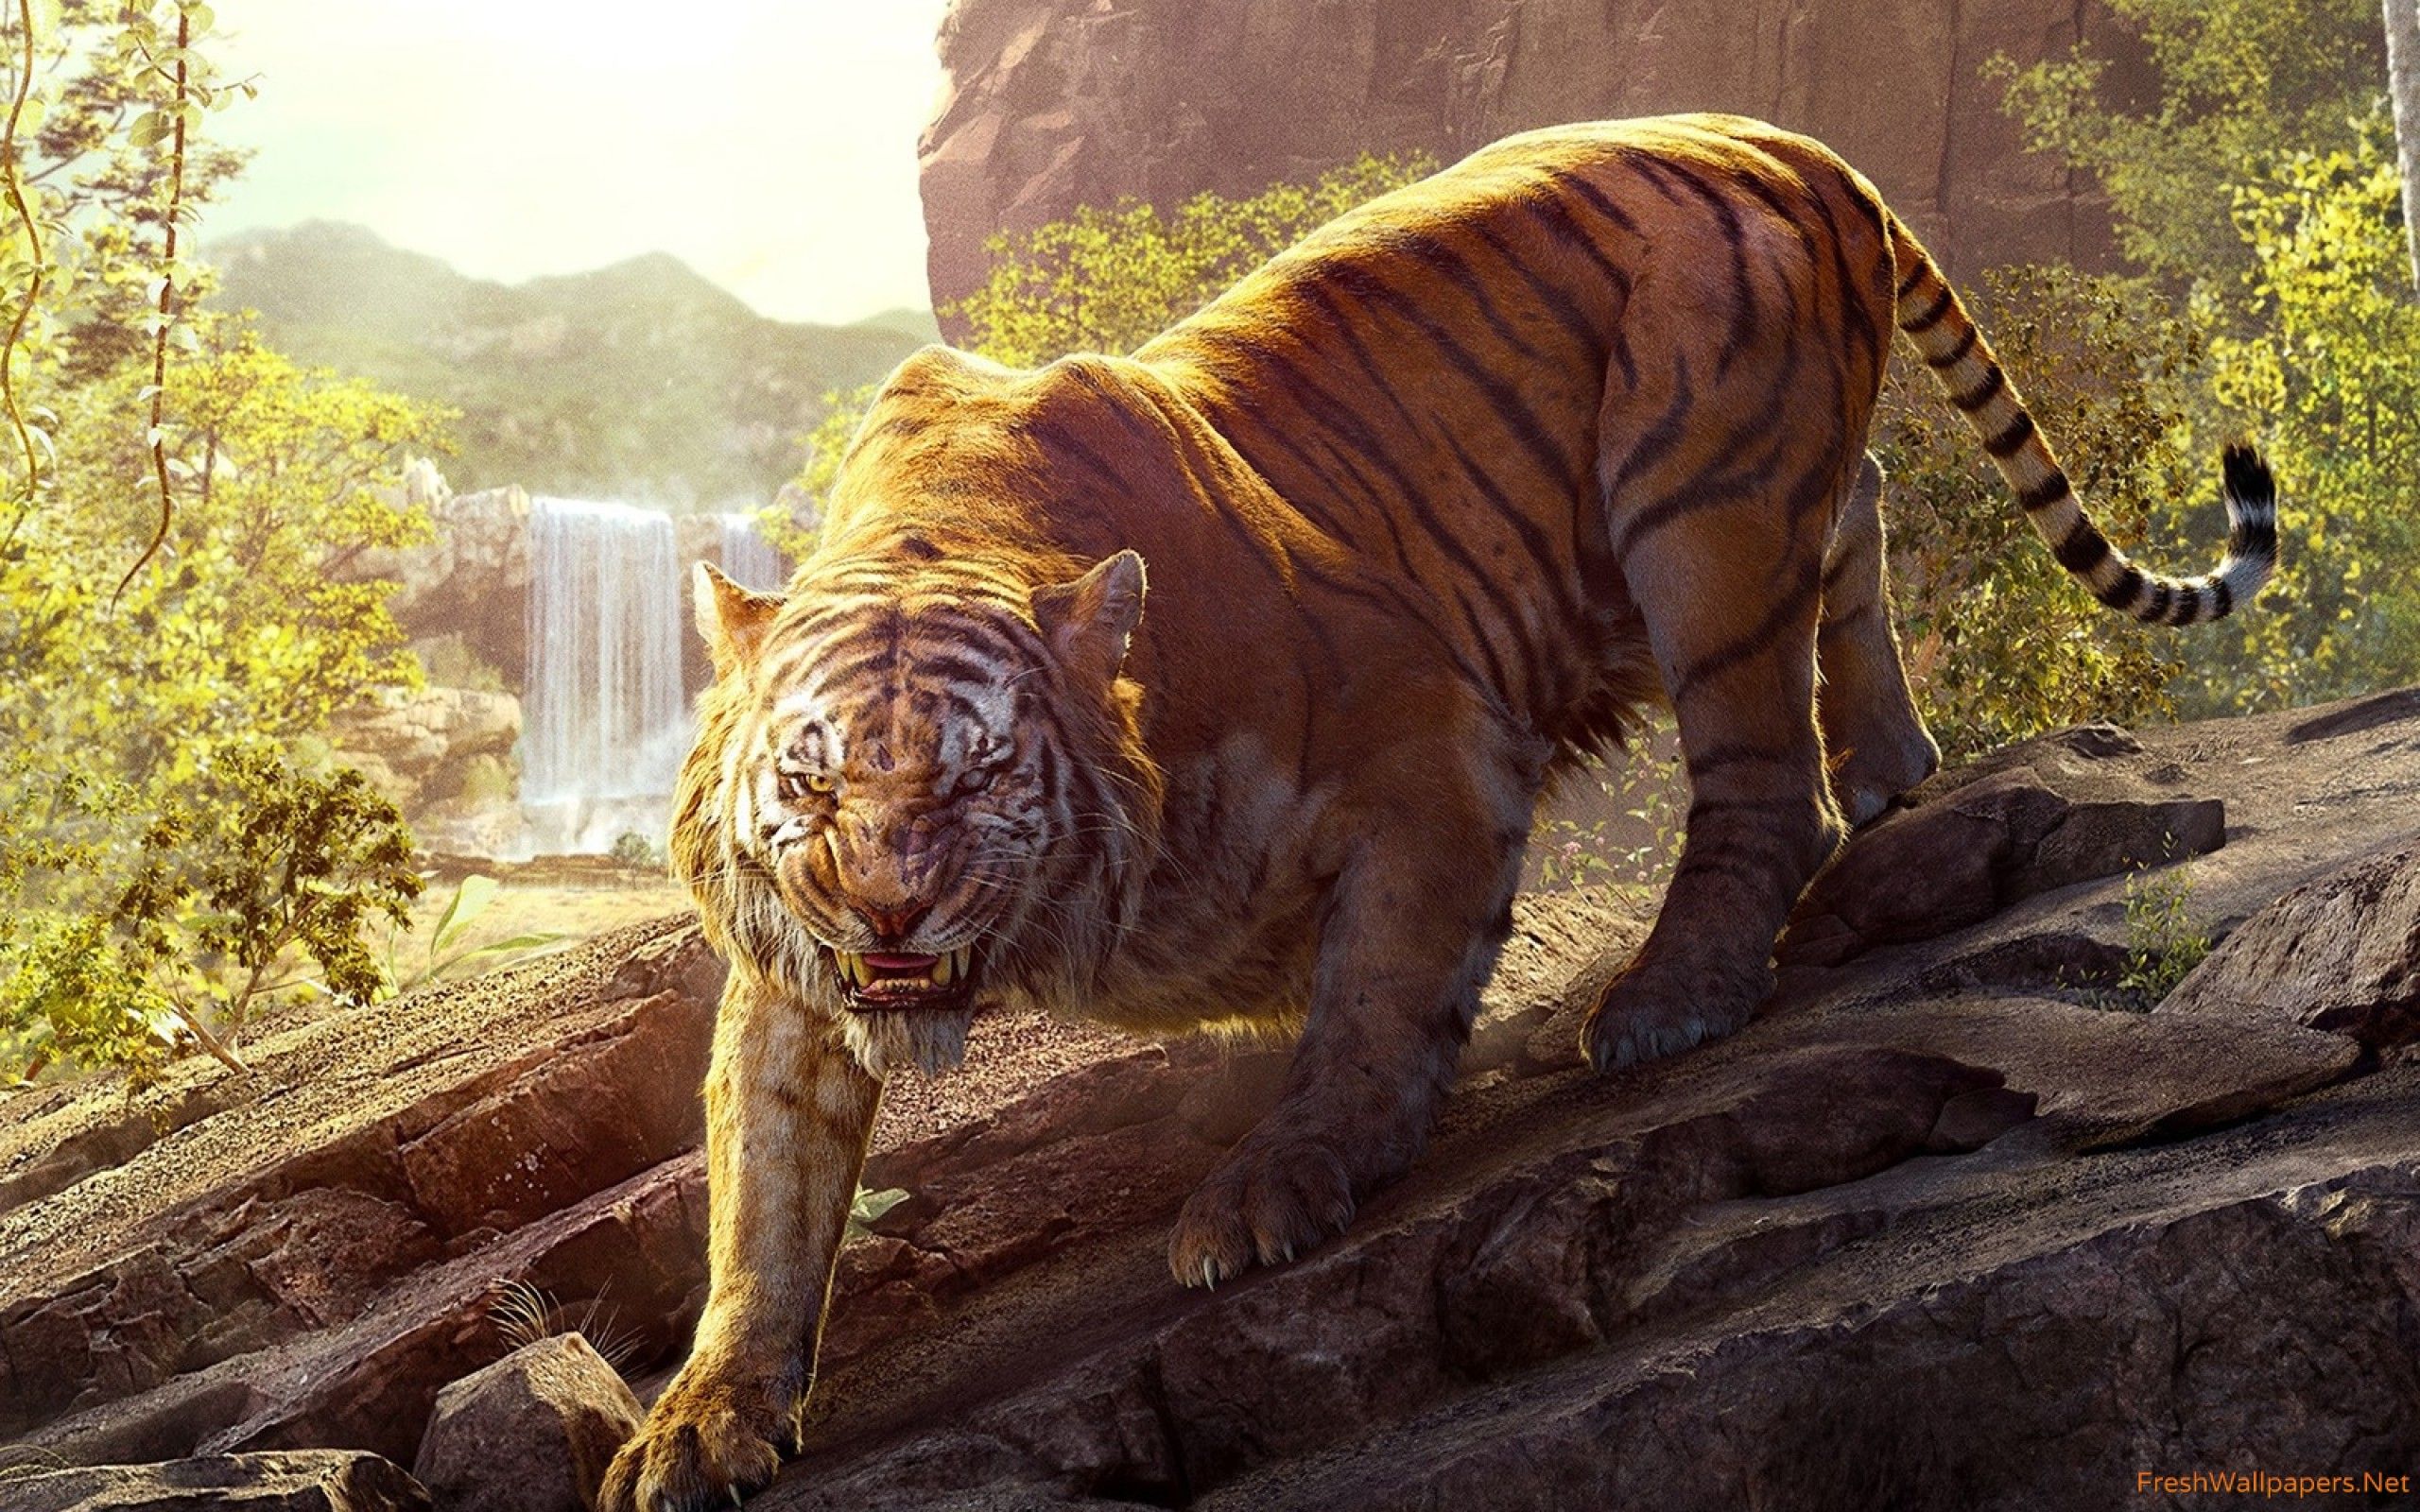 Shere Khan The Jungle Book 2016 wallpaper